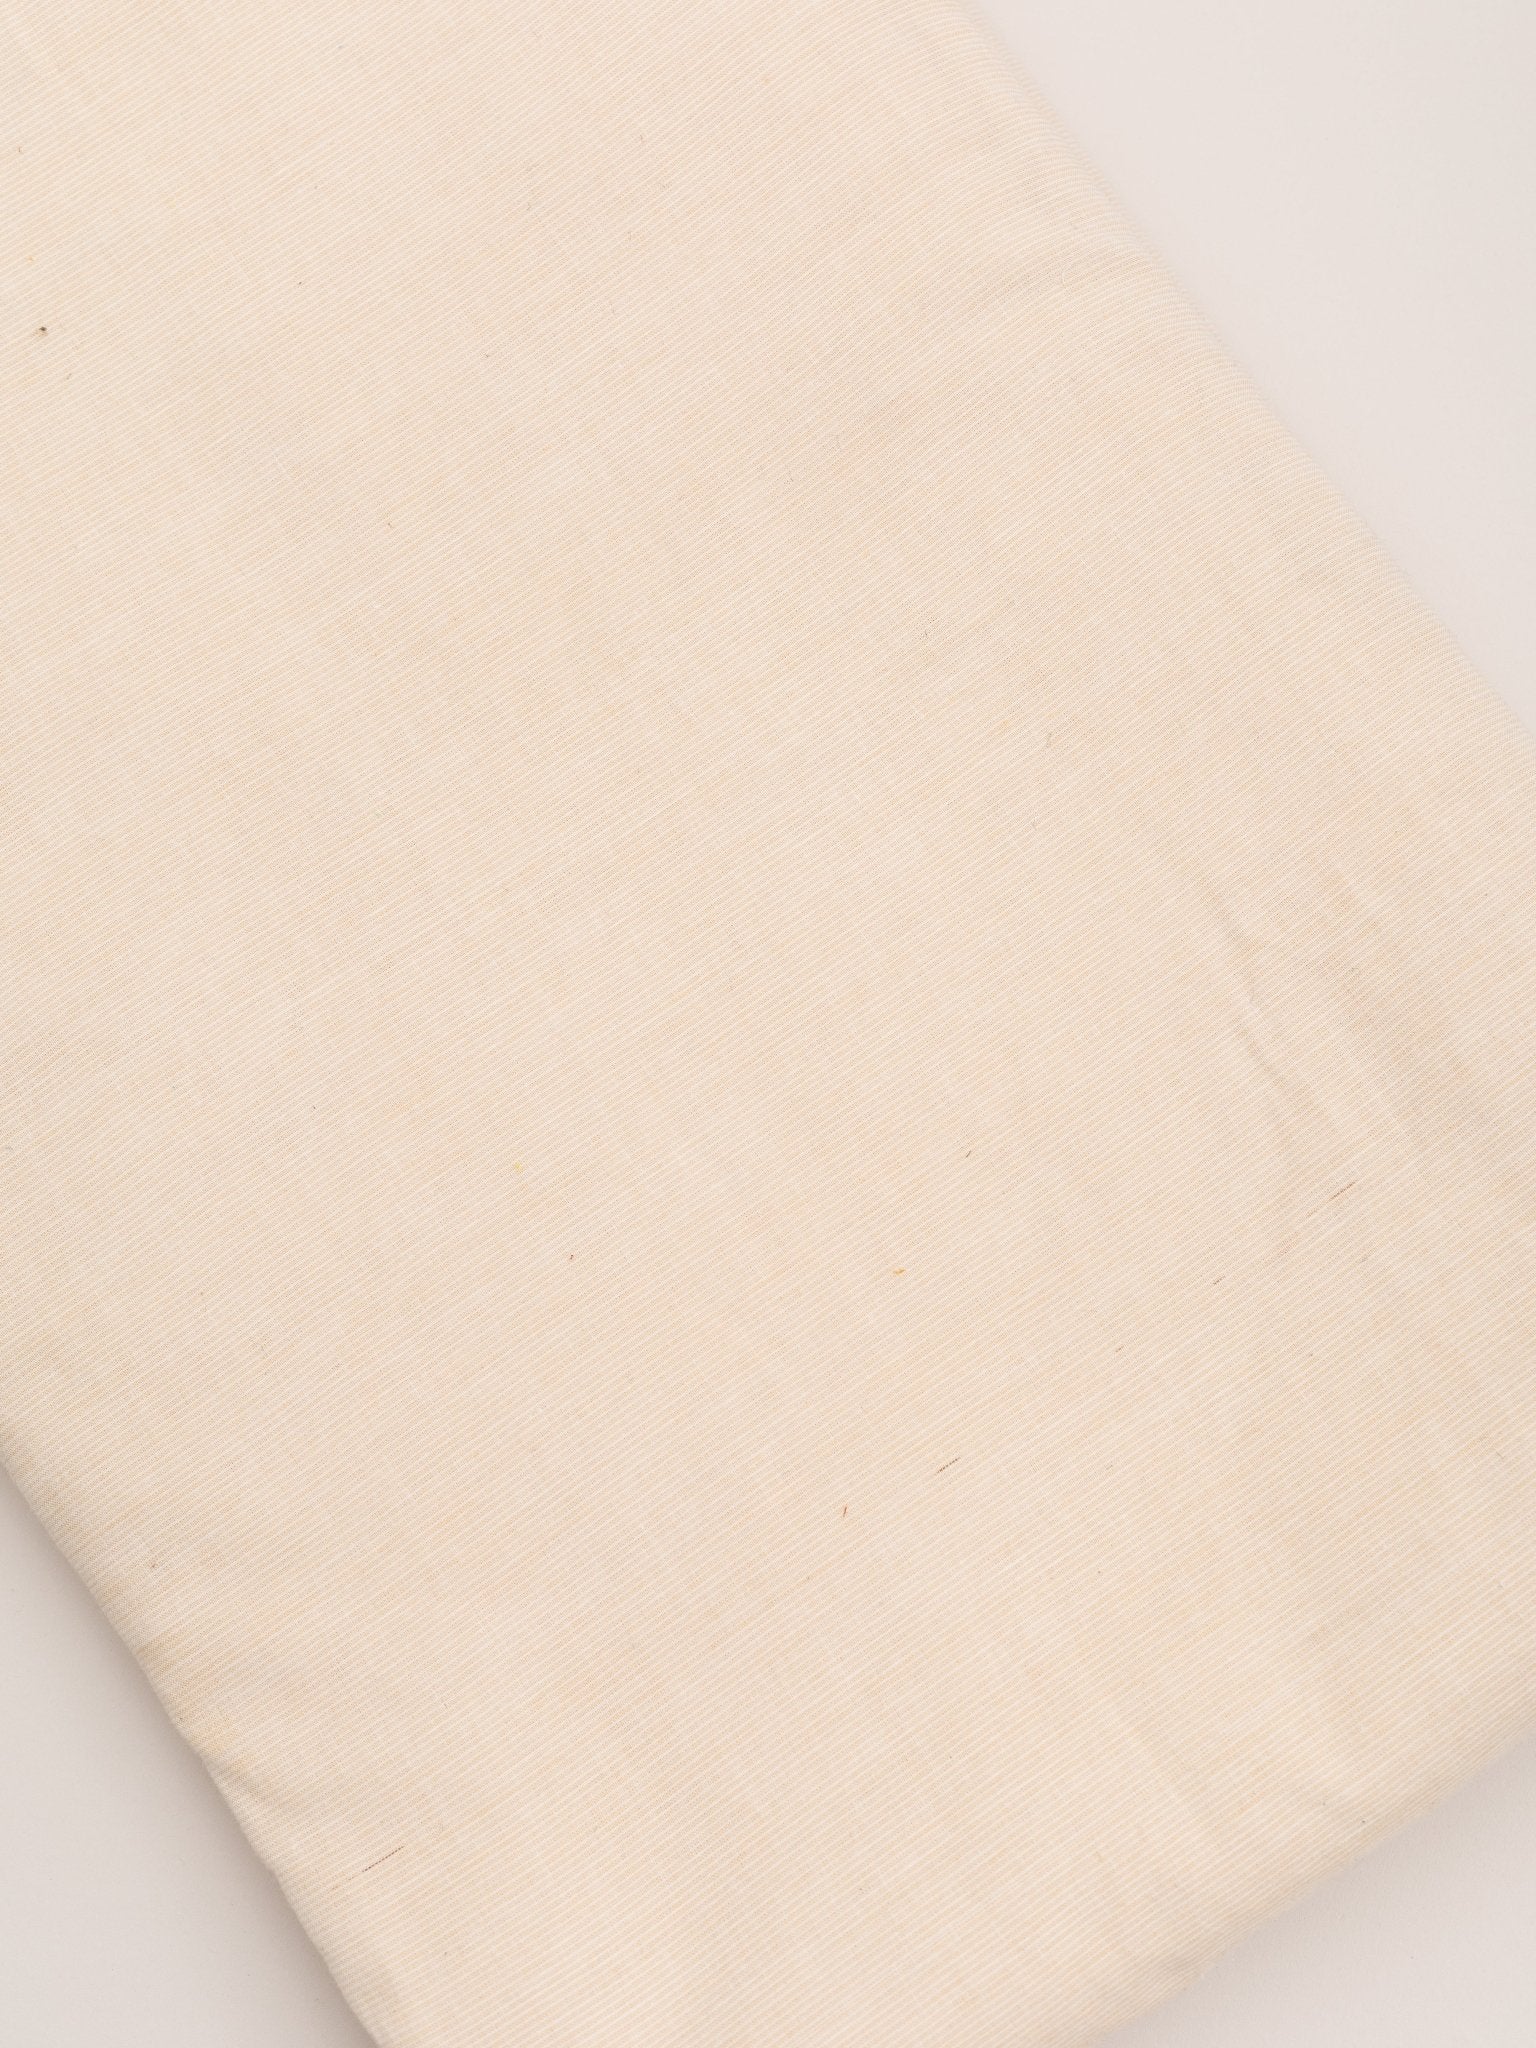 Cotton Striped Handloom Fabric - AINA